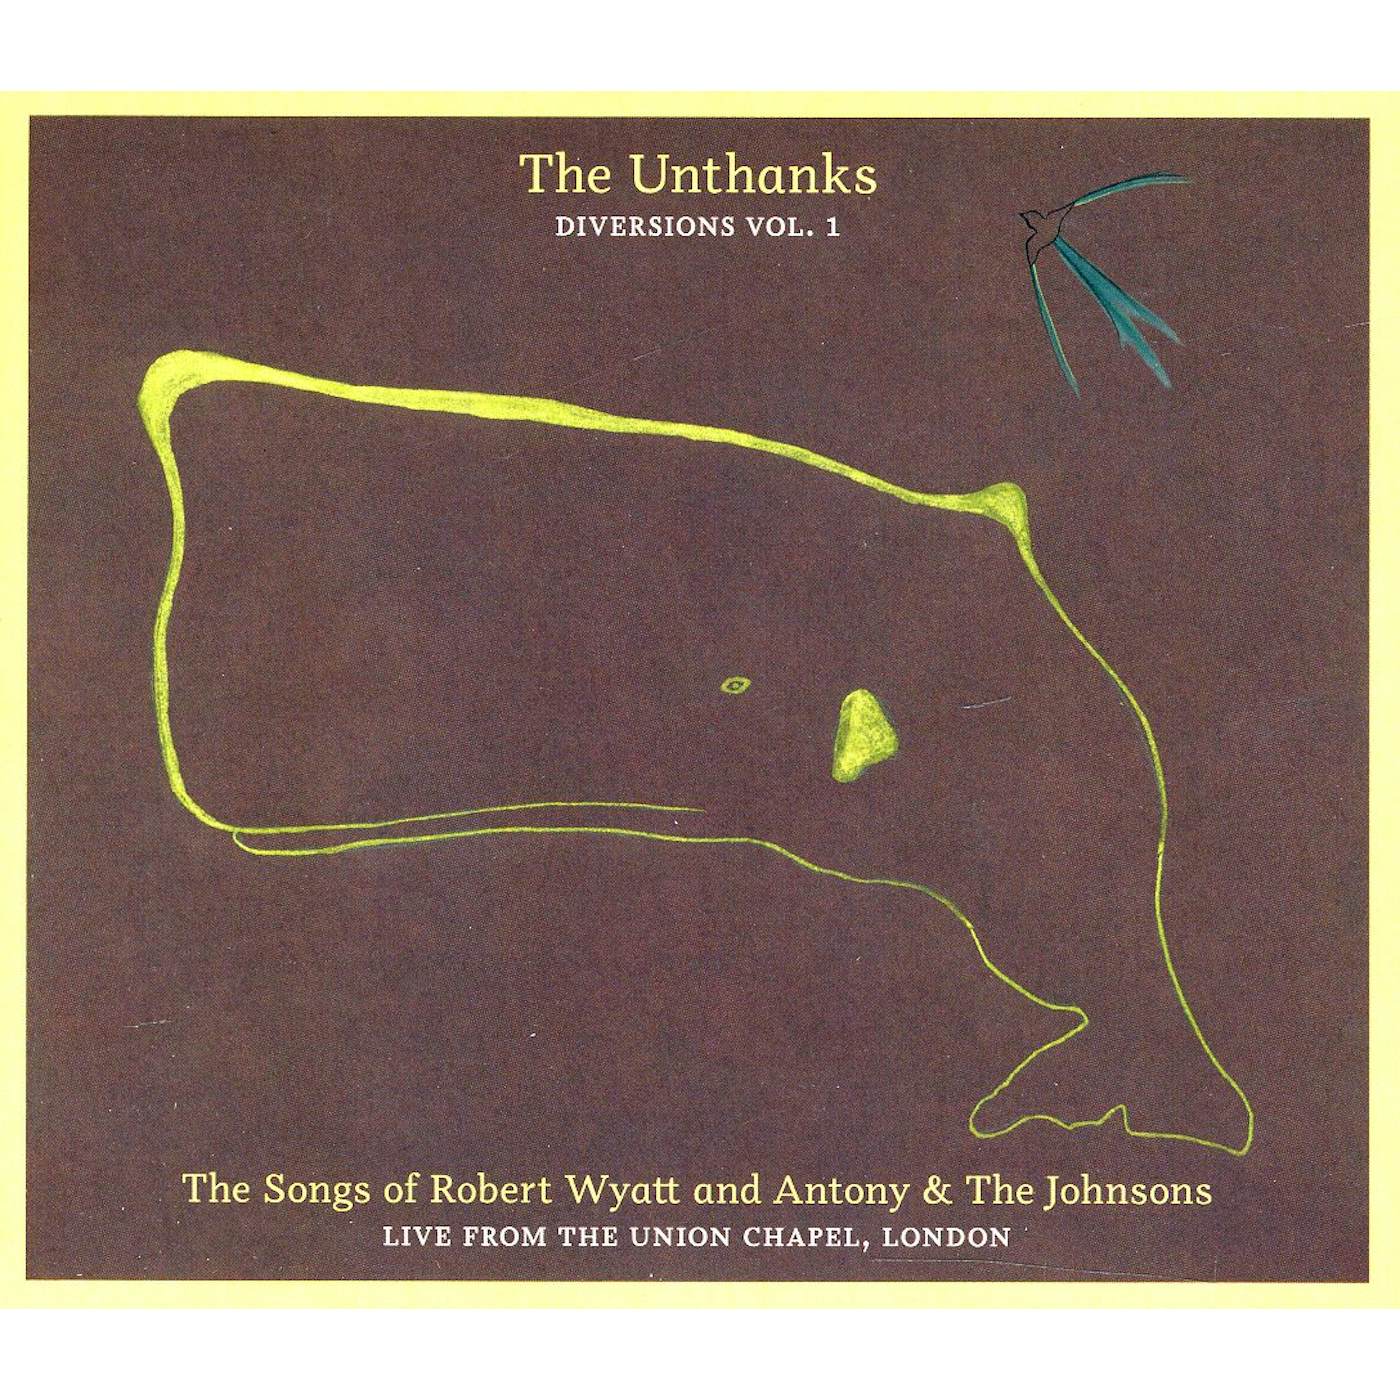 The Unthanks SONGS OF ROBERT WYATT & ANTONY & THE JOHNSONS CD